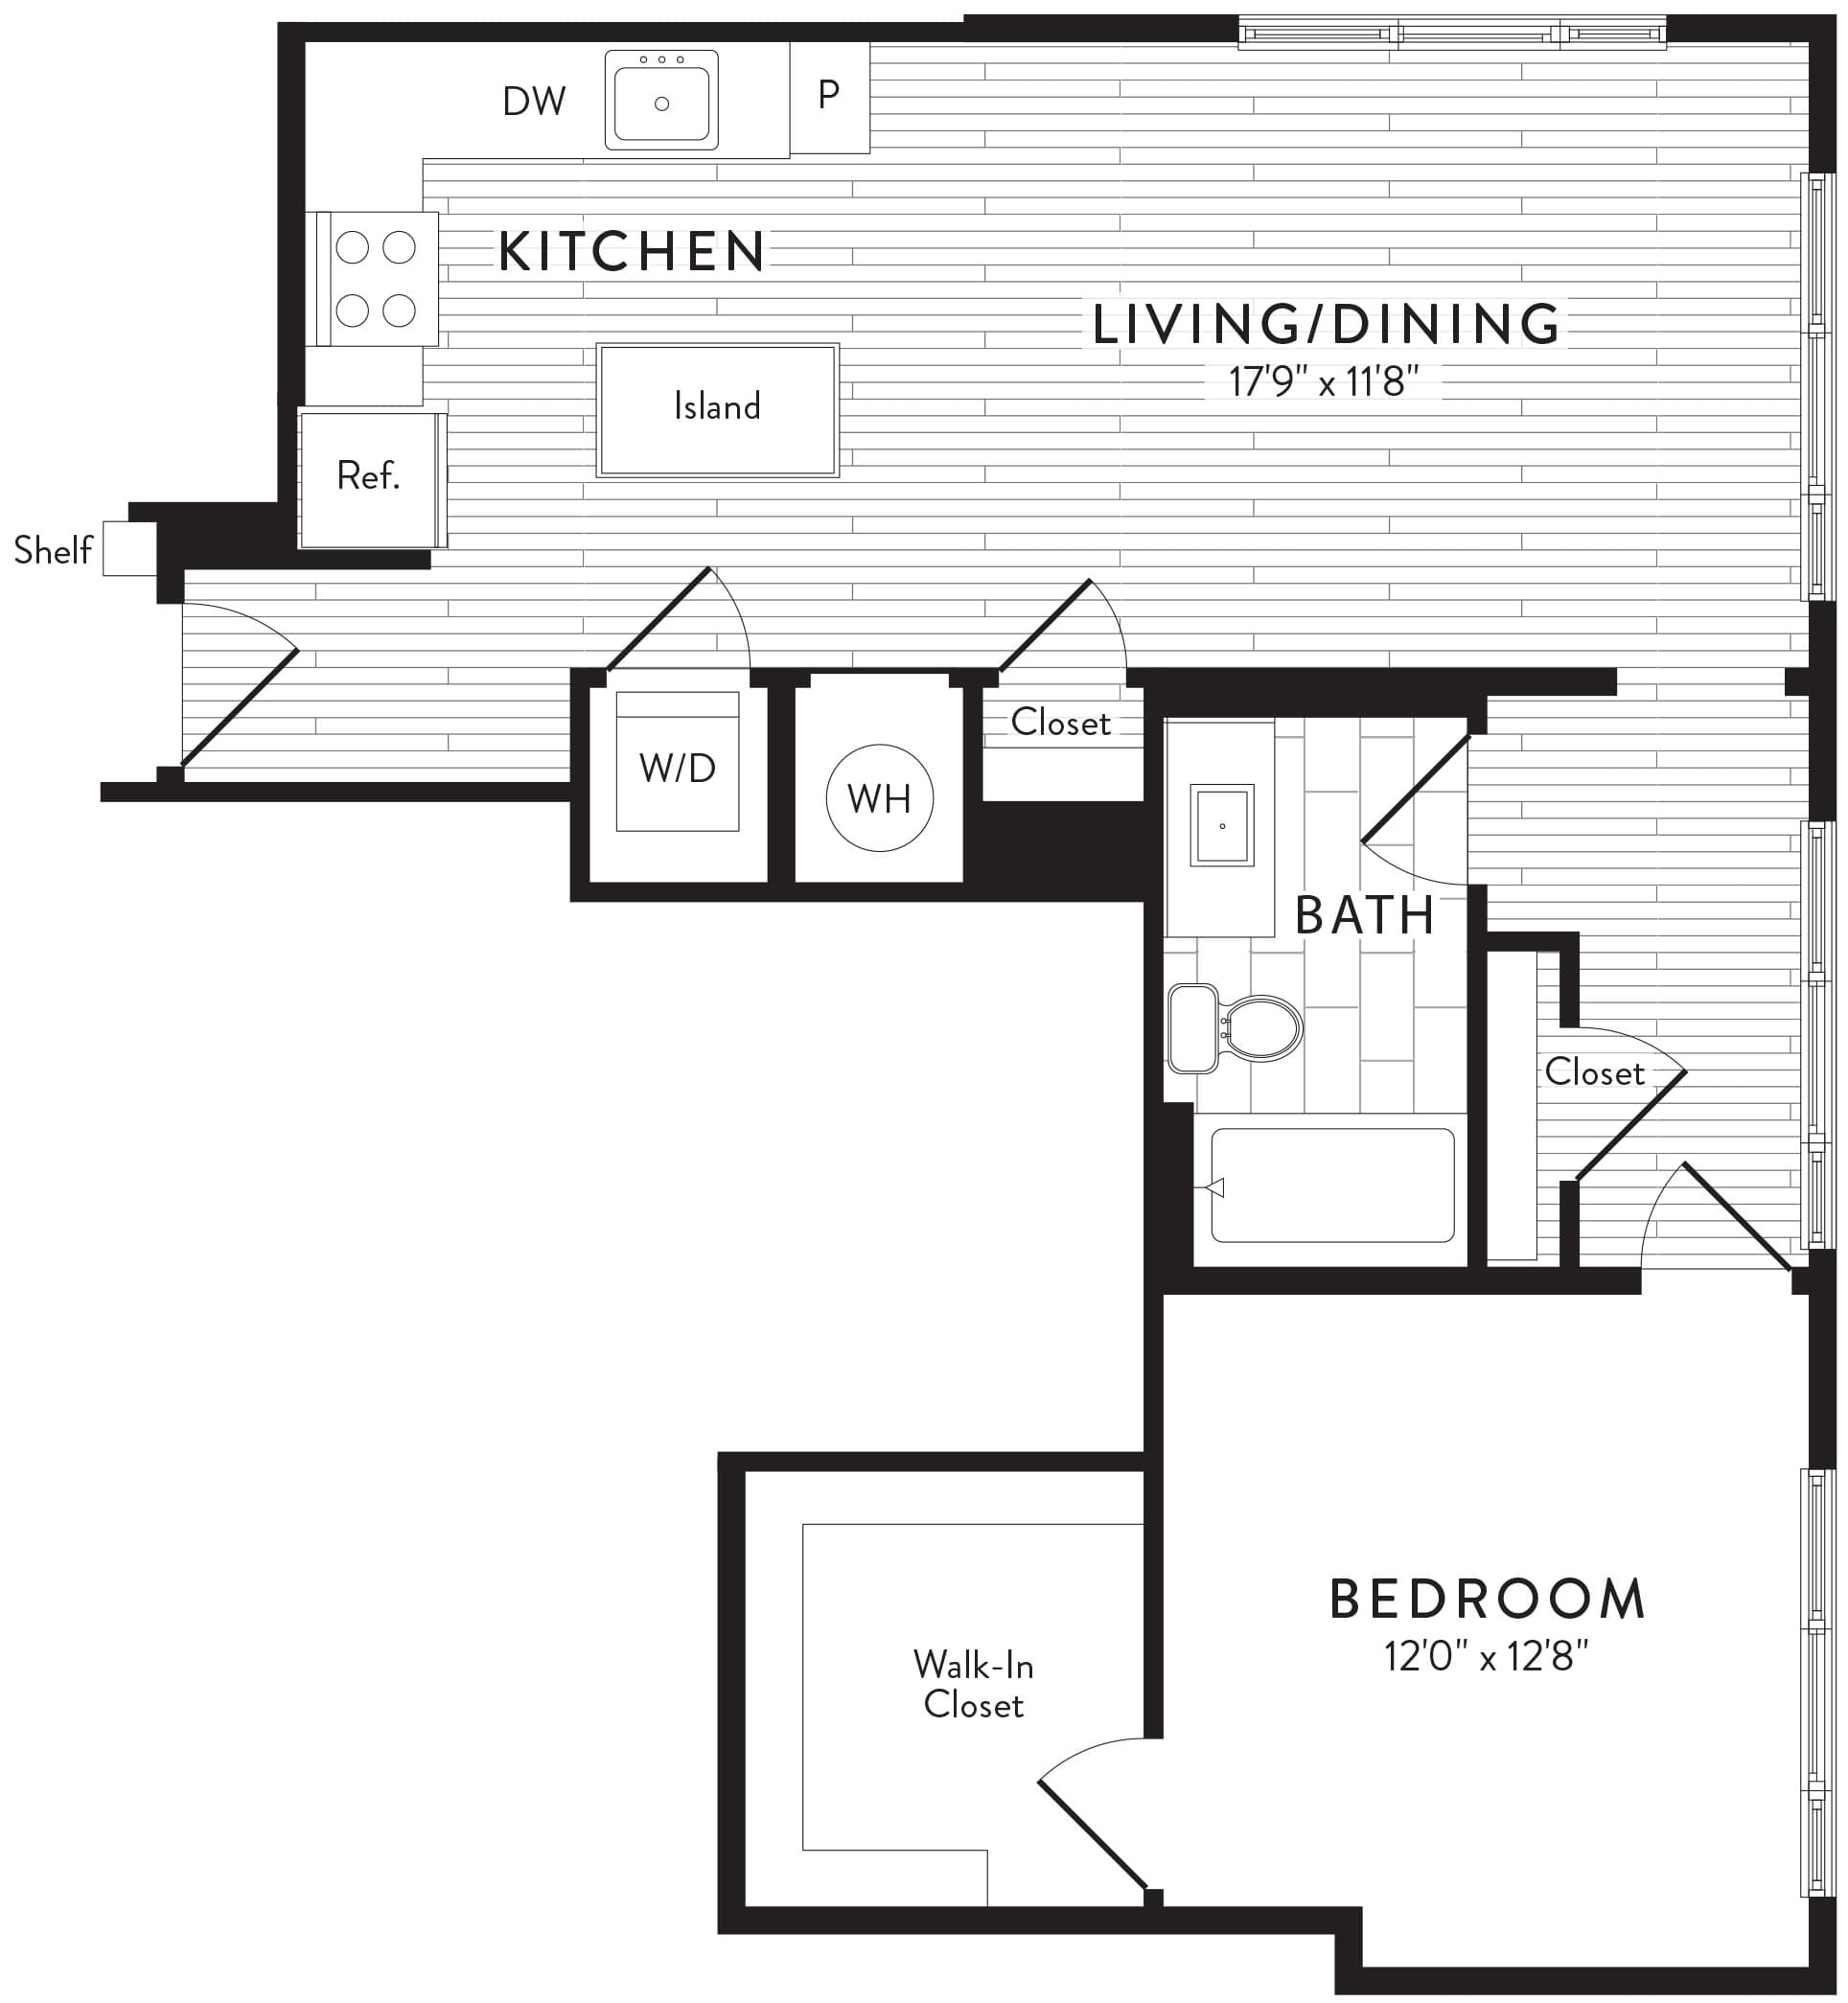 View Anthem House Apartment Floor Plans Studios, 1, 2, 3